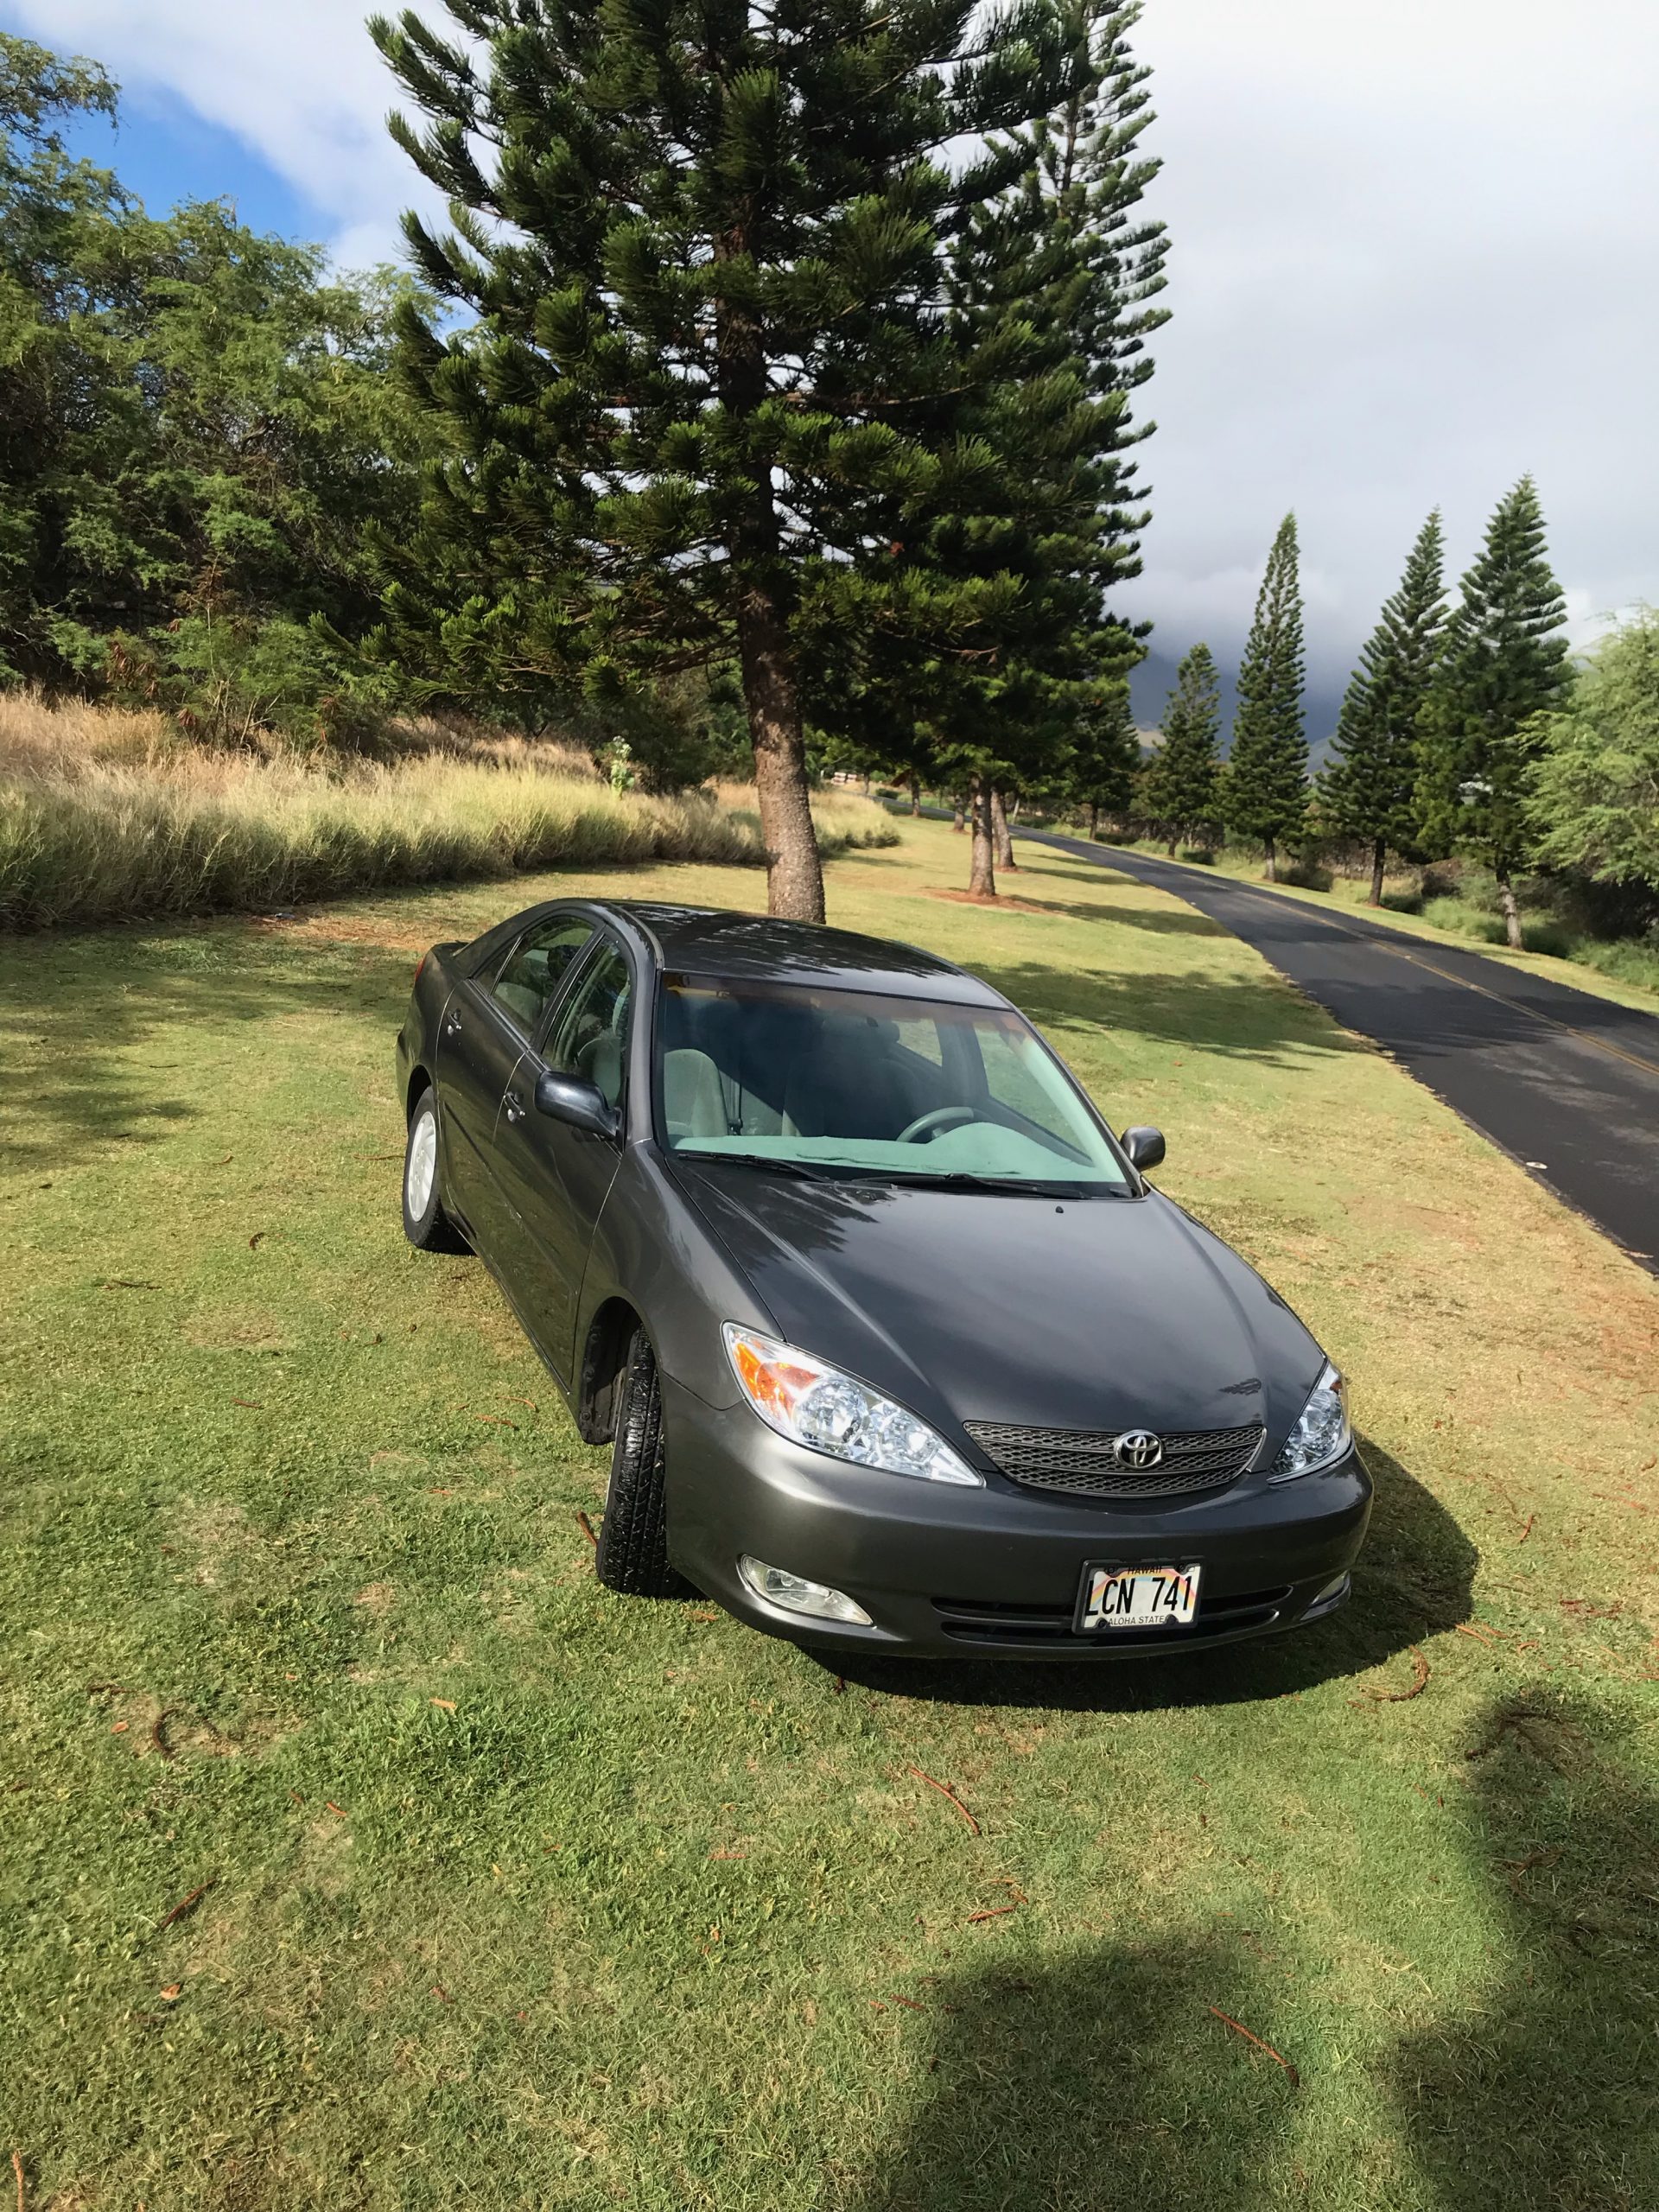 Maui Cruisers discount Car Rental service